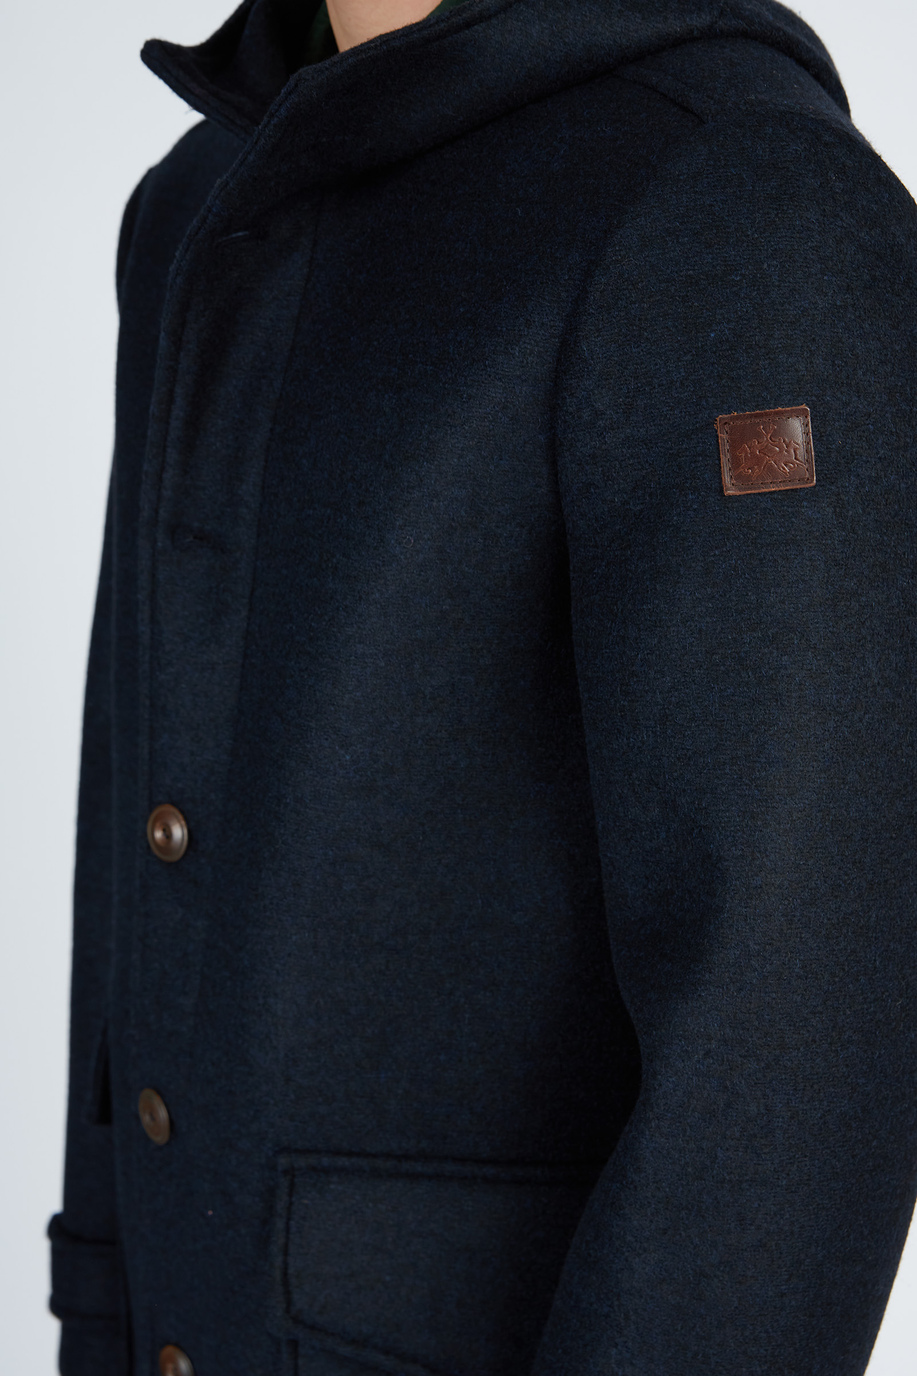 Leyendas Del Polo men’s wool blend jacket with buttons regular fit - Elegant looks for him | La Martina - Official Online Shop